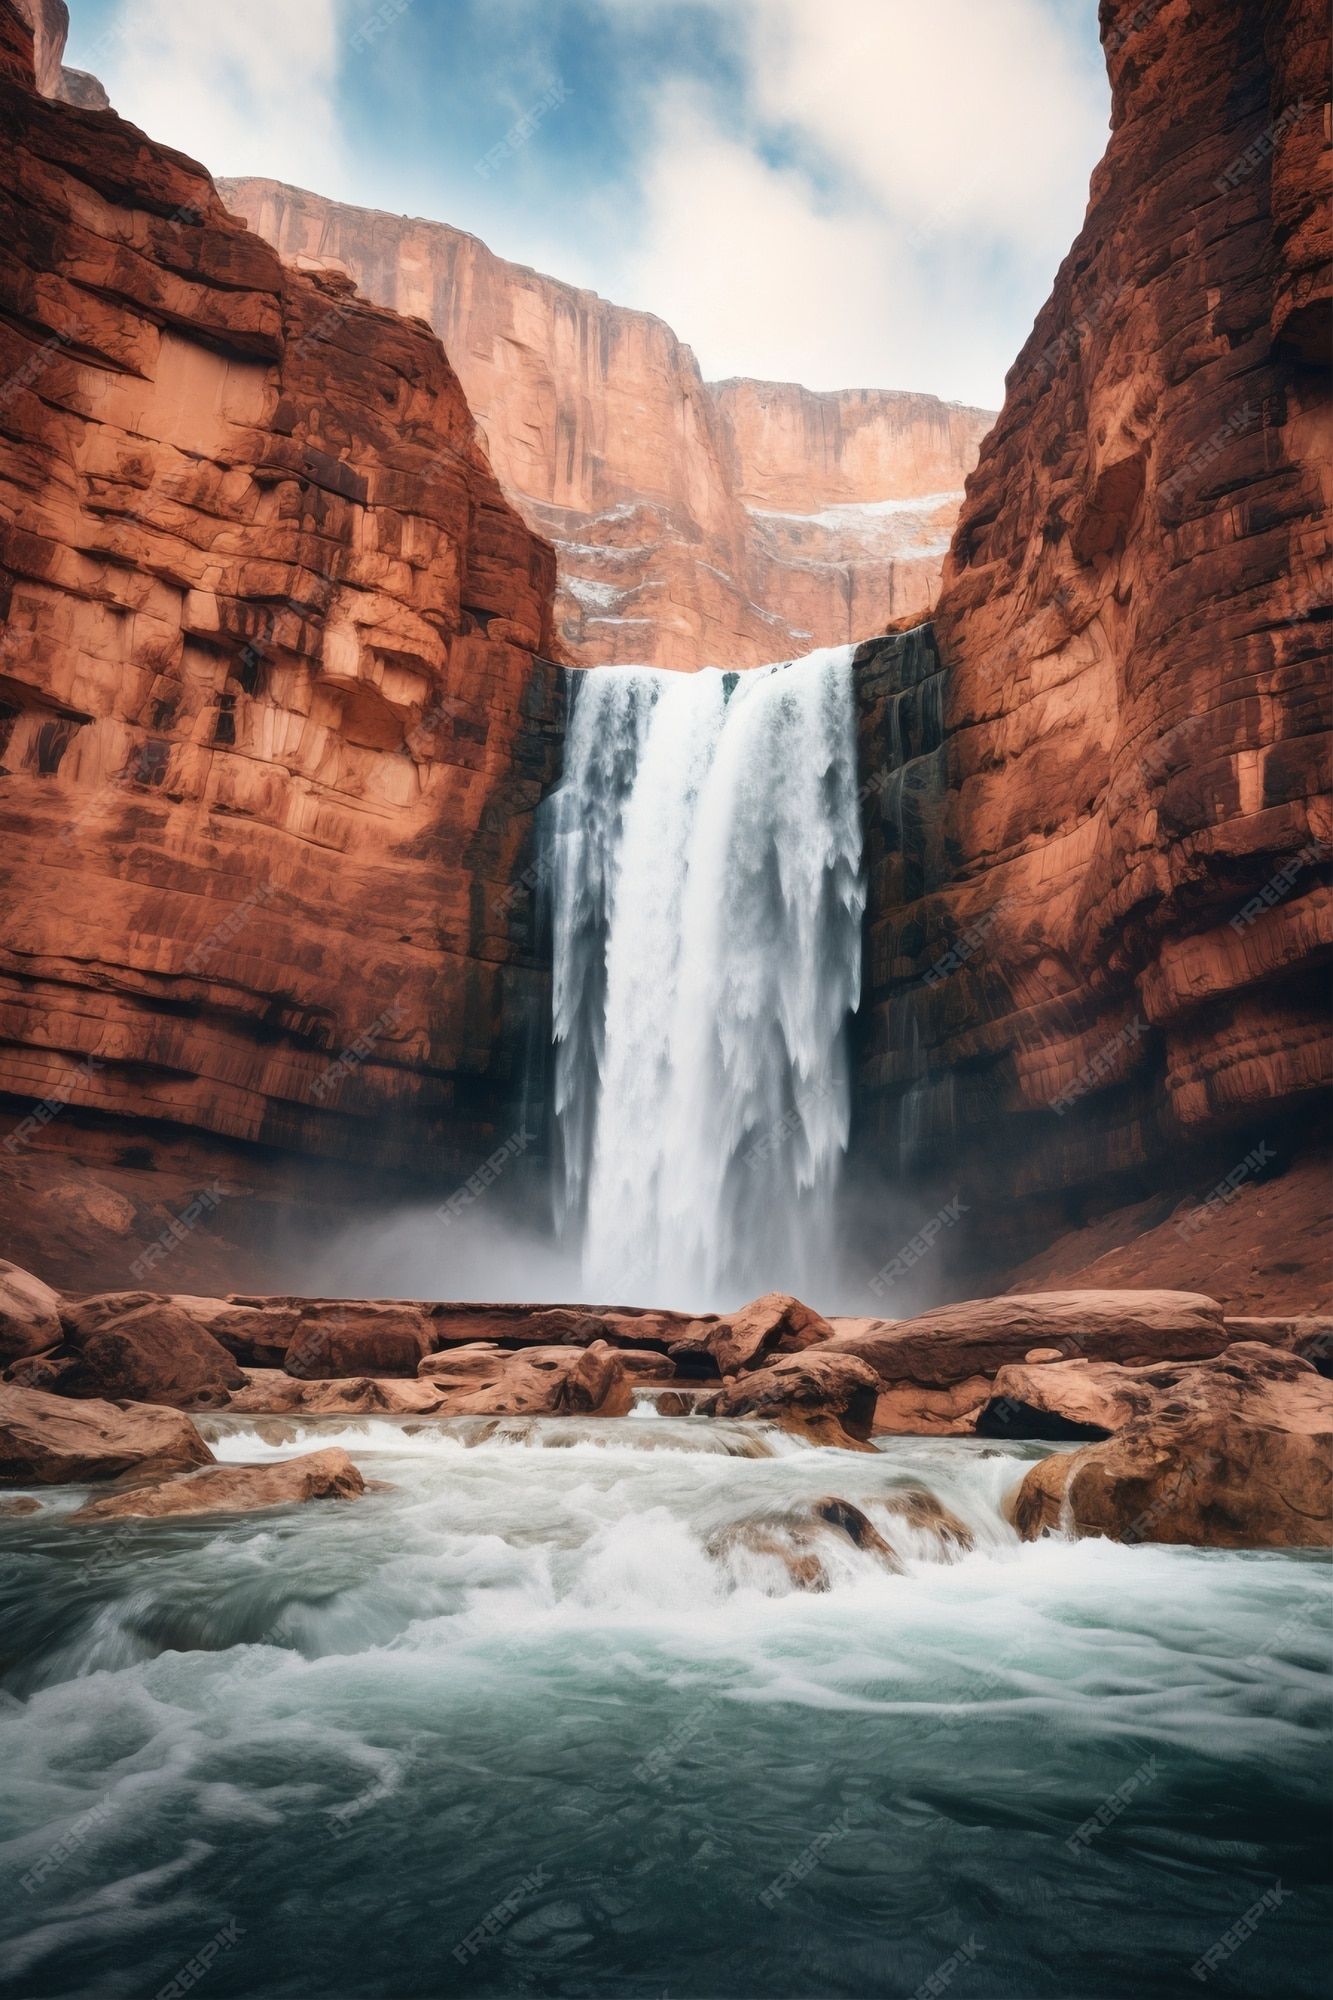 Waterfalls Background Image